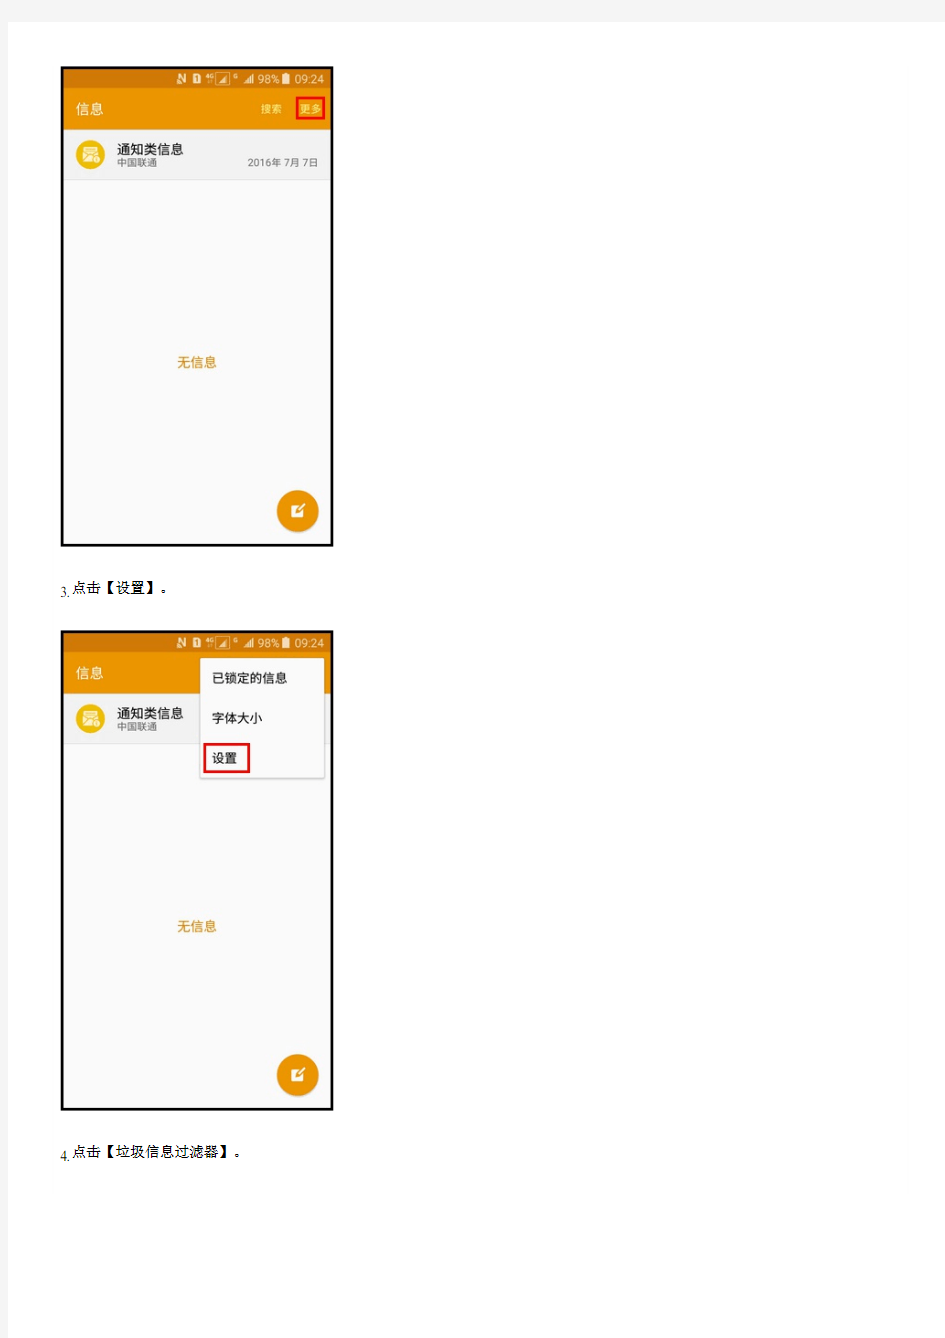 Samsung Galaxy J3 Pro SM-J3110(5.1.1)如何设置短信黑名单